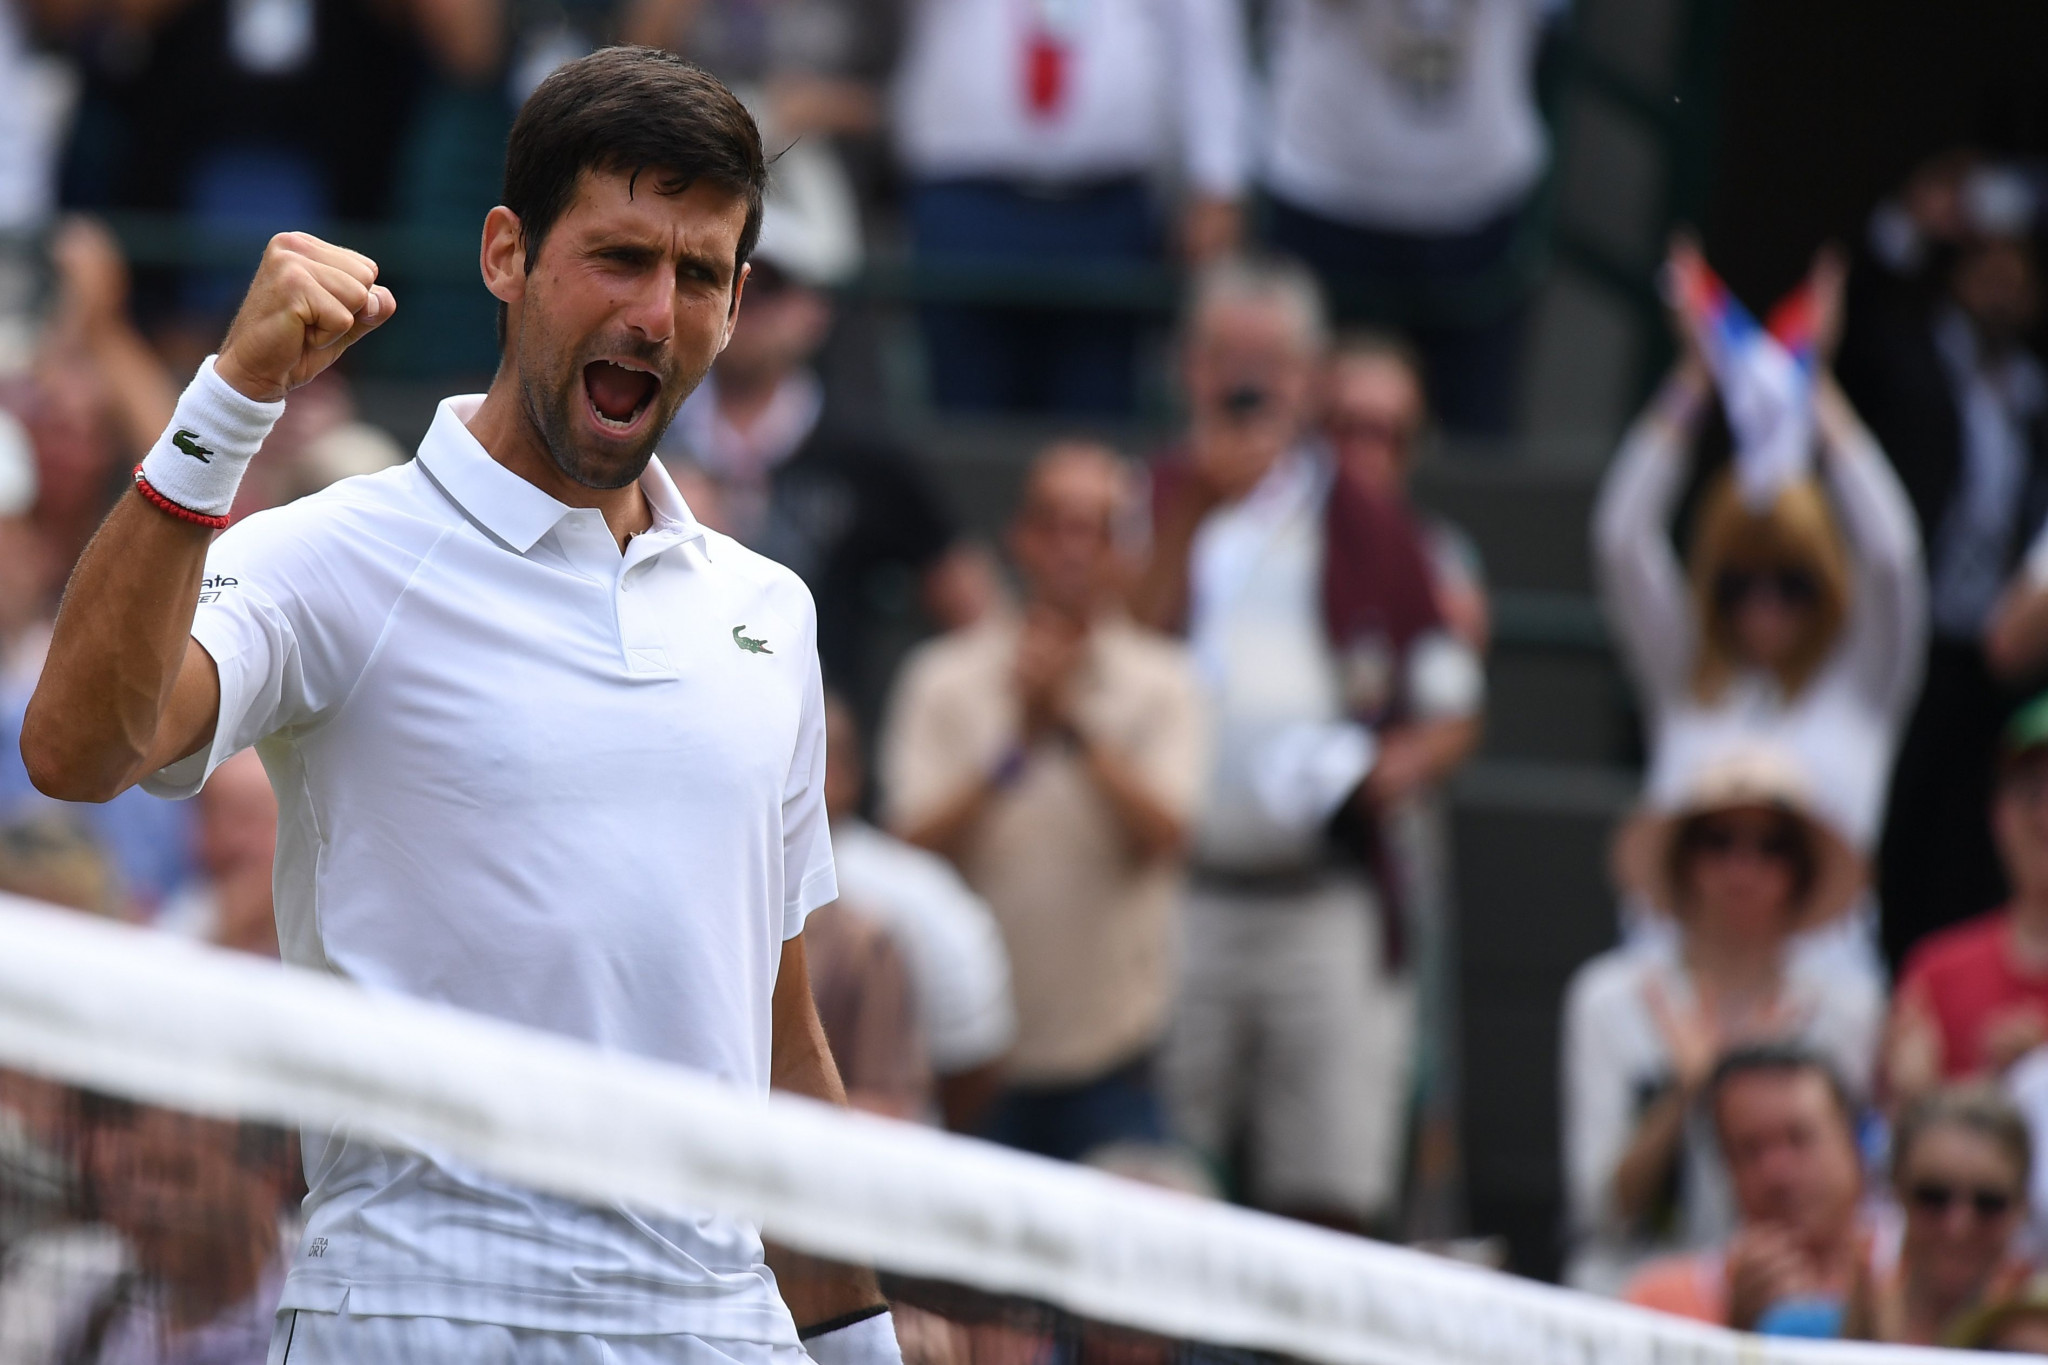 Defending champion Djokovic through to fourth round at Wimbledon